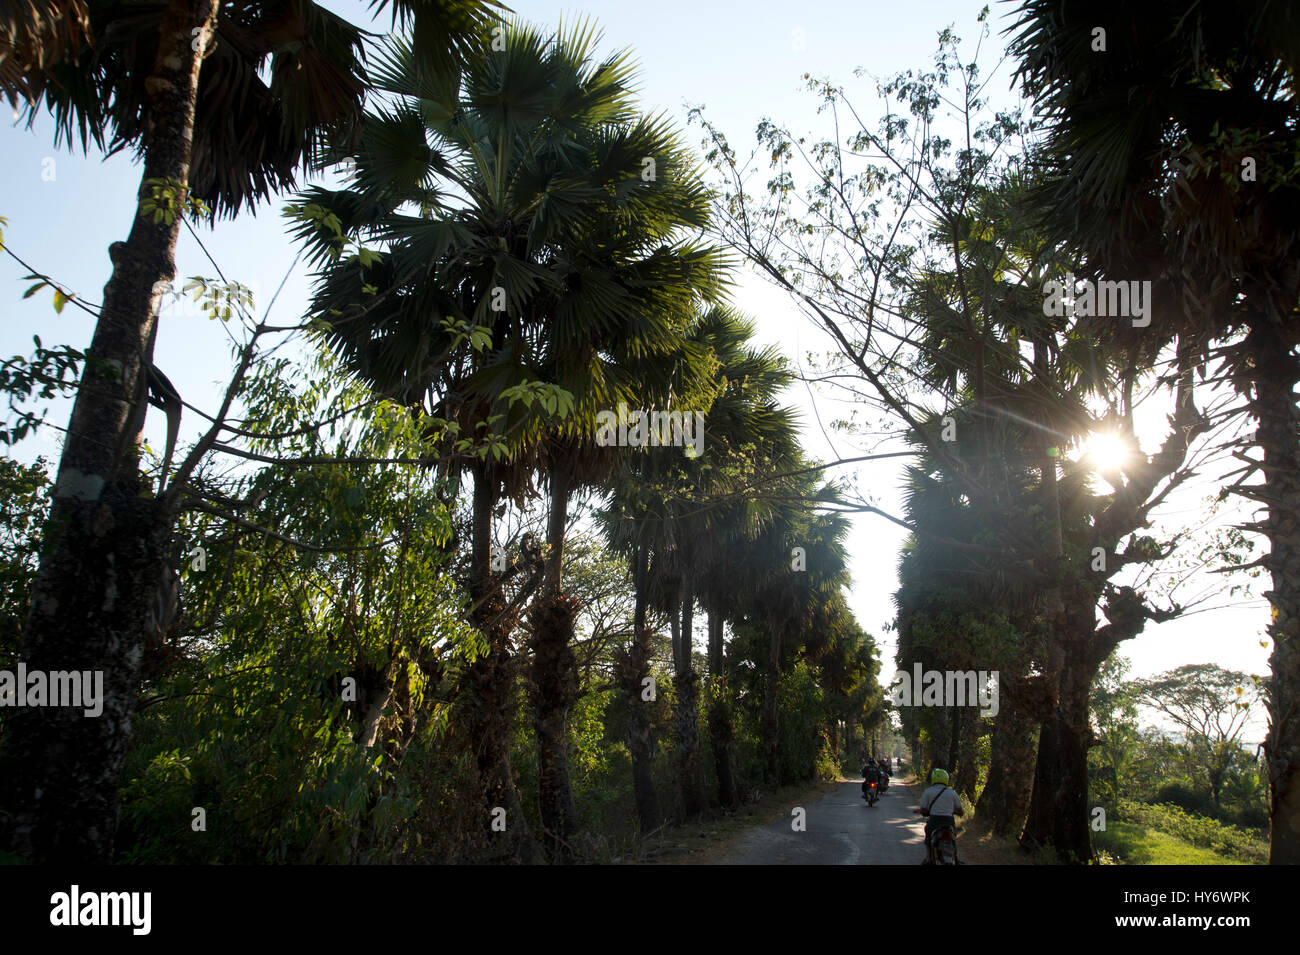 Myanmar (Burma). Mawlamyine. Bilu Kyun (Ogre Island). Country road lined with palm trees. Stock Photo